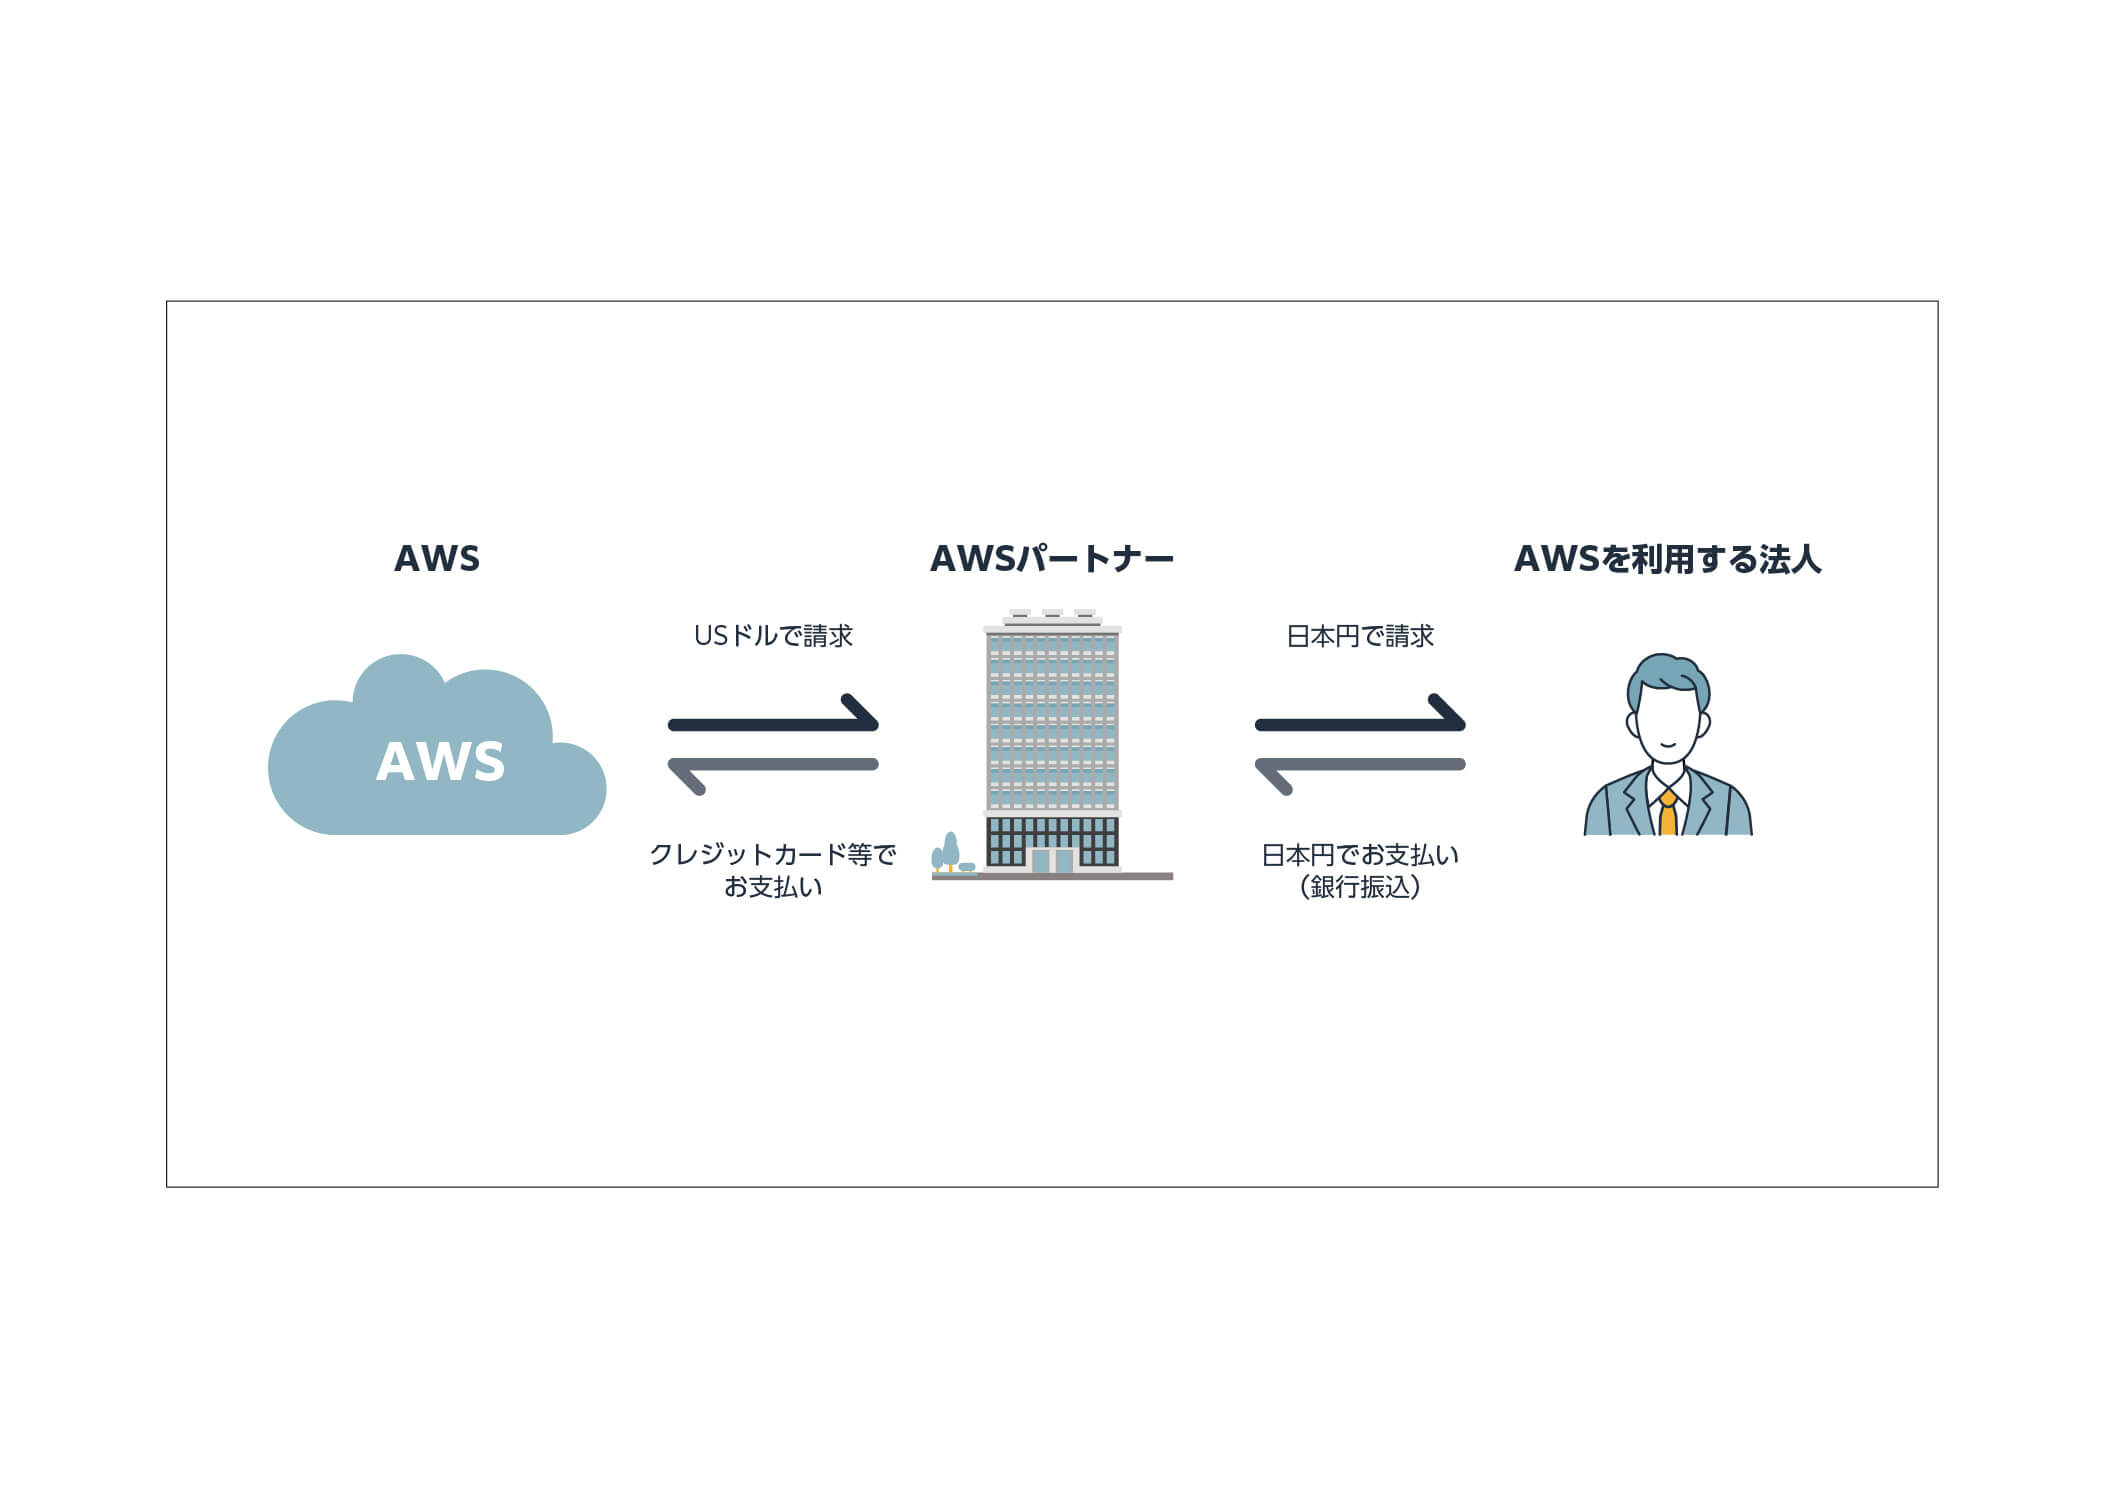 AWS直接契約と異なるAWS請求代行サービスの利用イメージ